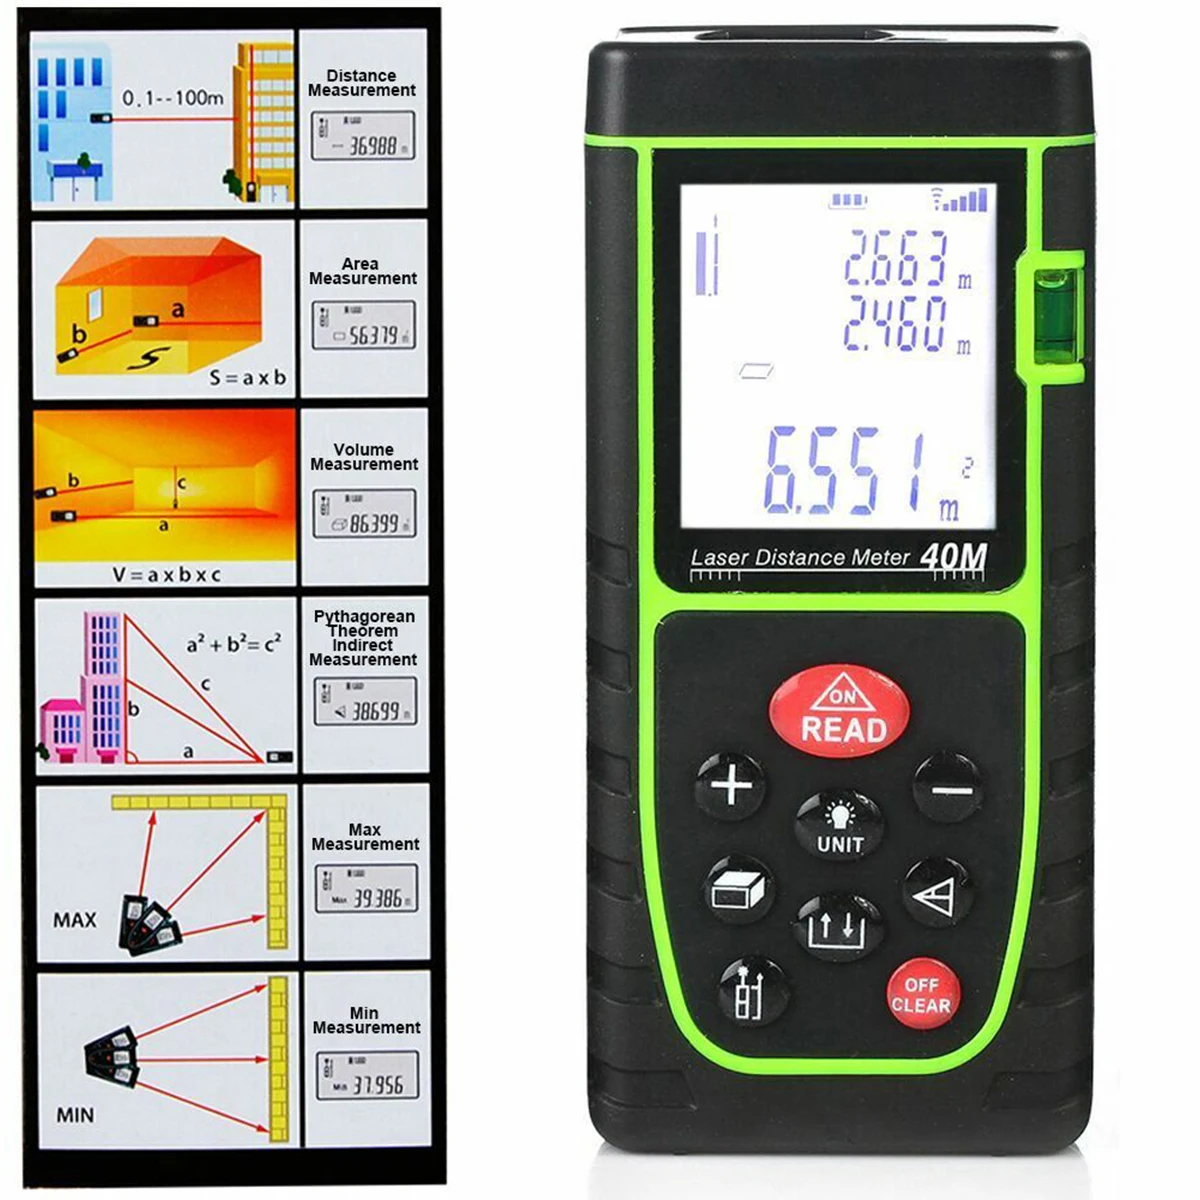 

Mini &Portable Handheld Digital Laser Point Distance Meter Range Finder Measure Tape one button operation 40m/131ft